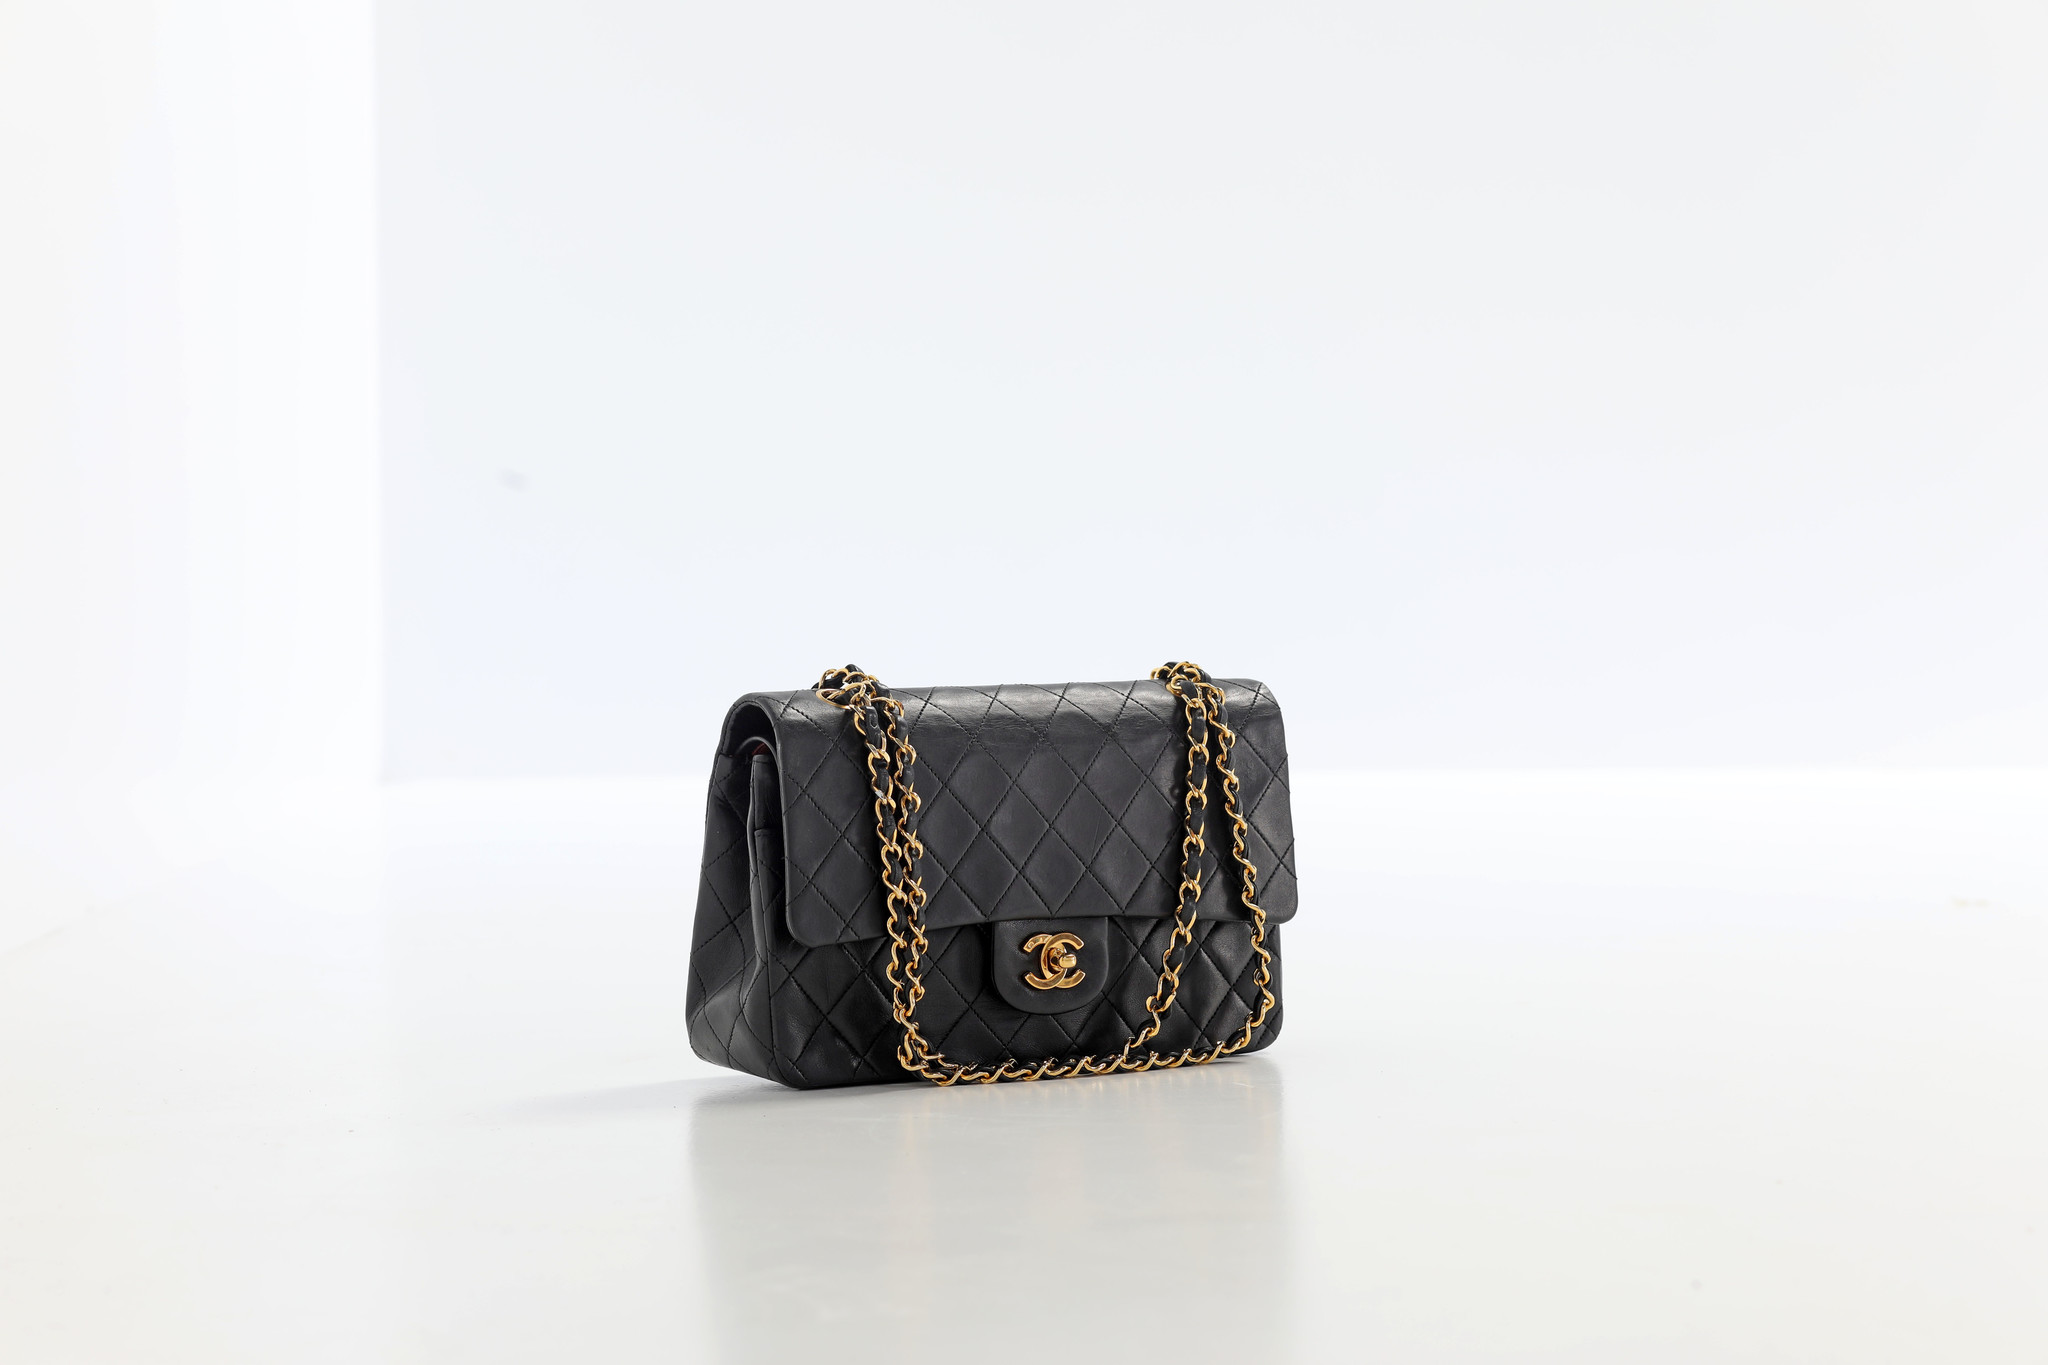 Chanel Classic double flap bag